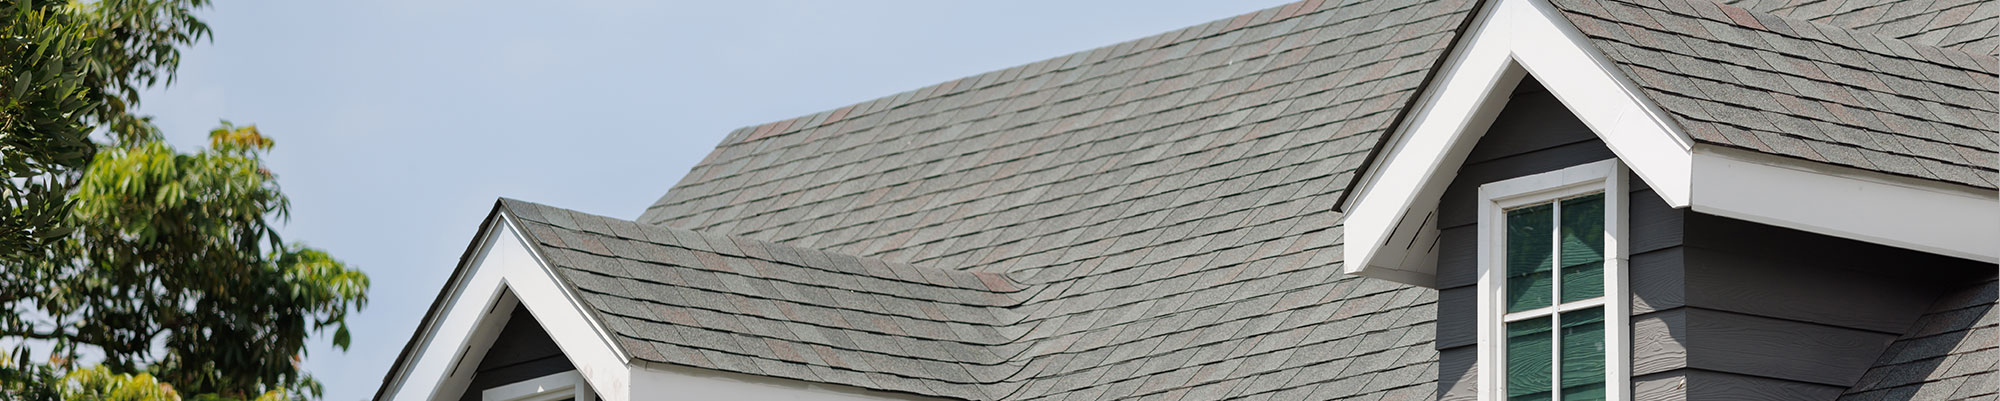 Oak Creek roof replacement company